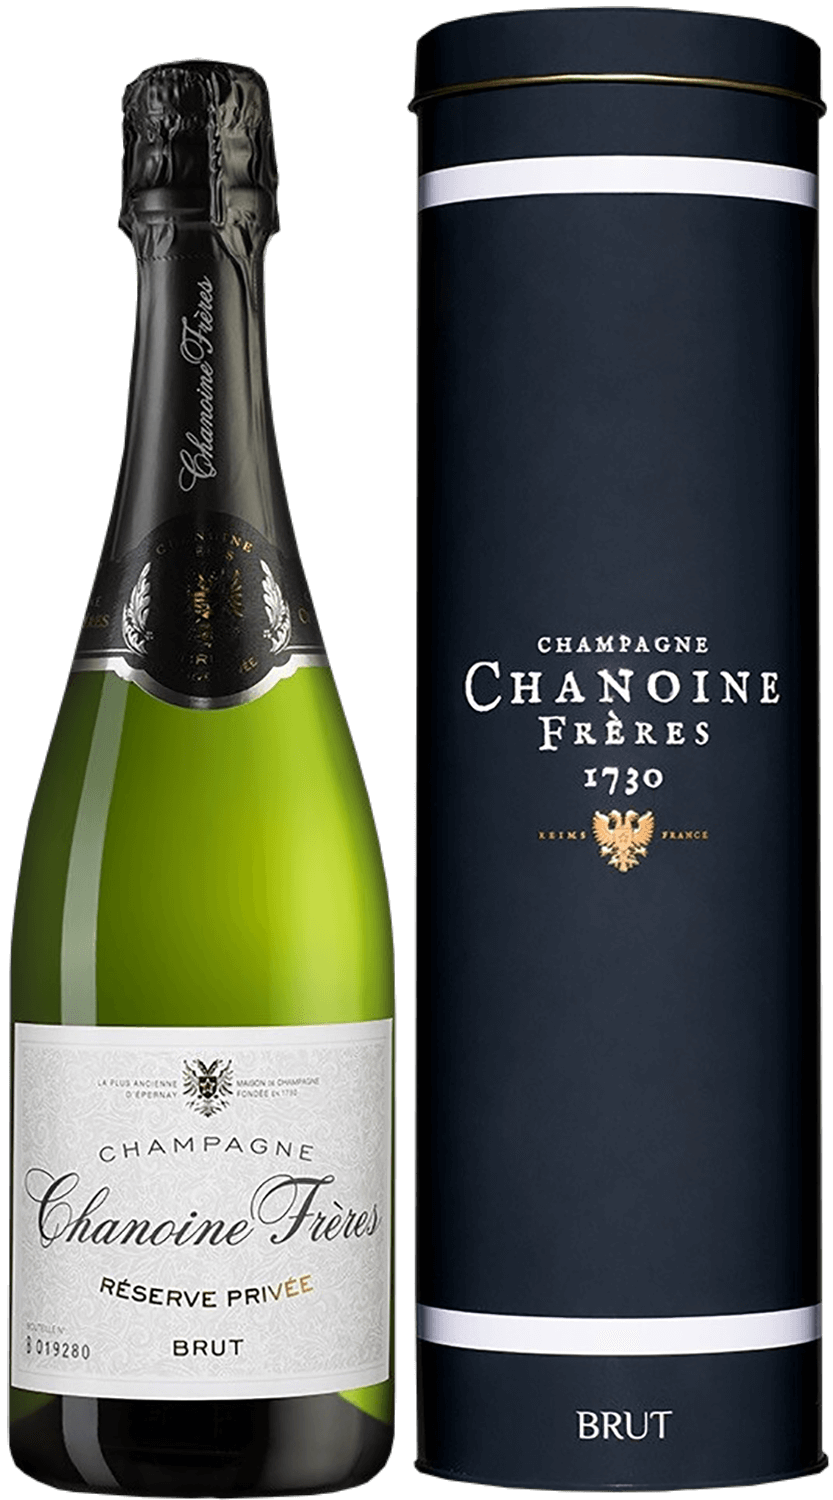 Reserve Privee Brut Champagne AOC Chanoine Freres (gift box) rosé de meunier extra brut champagne aoс laherte freres gift box